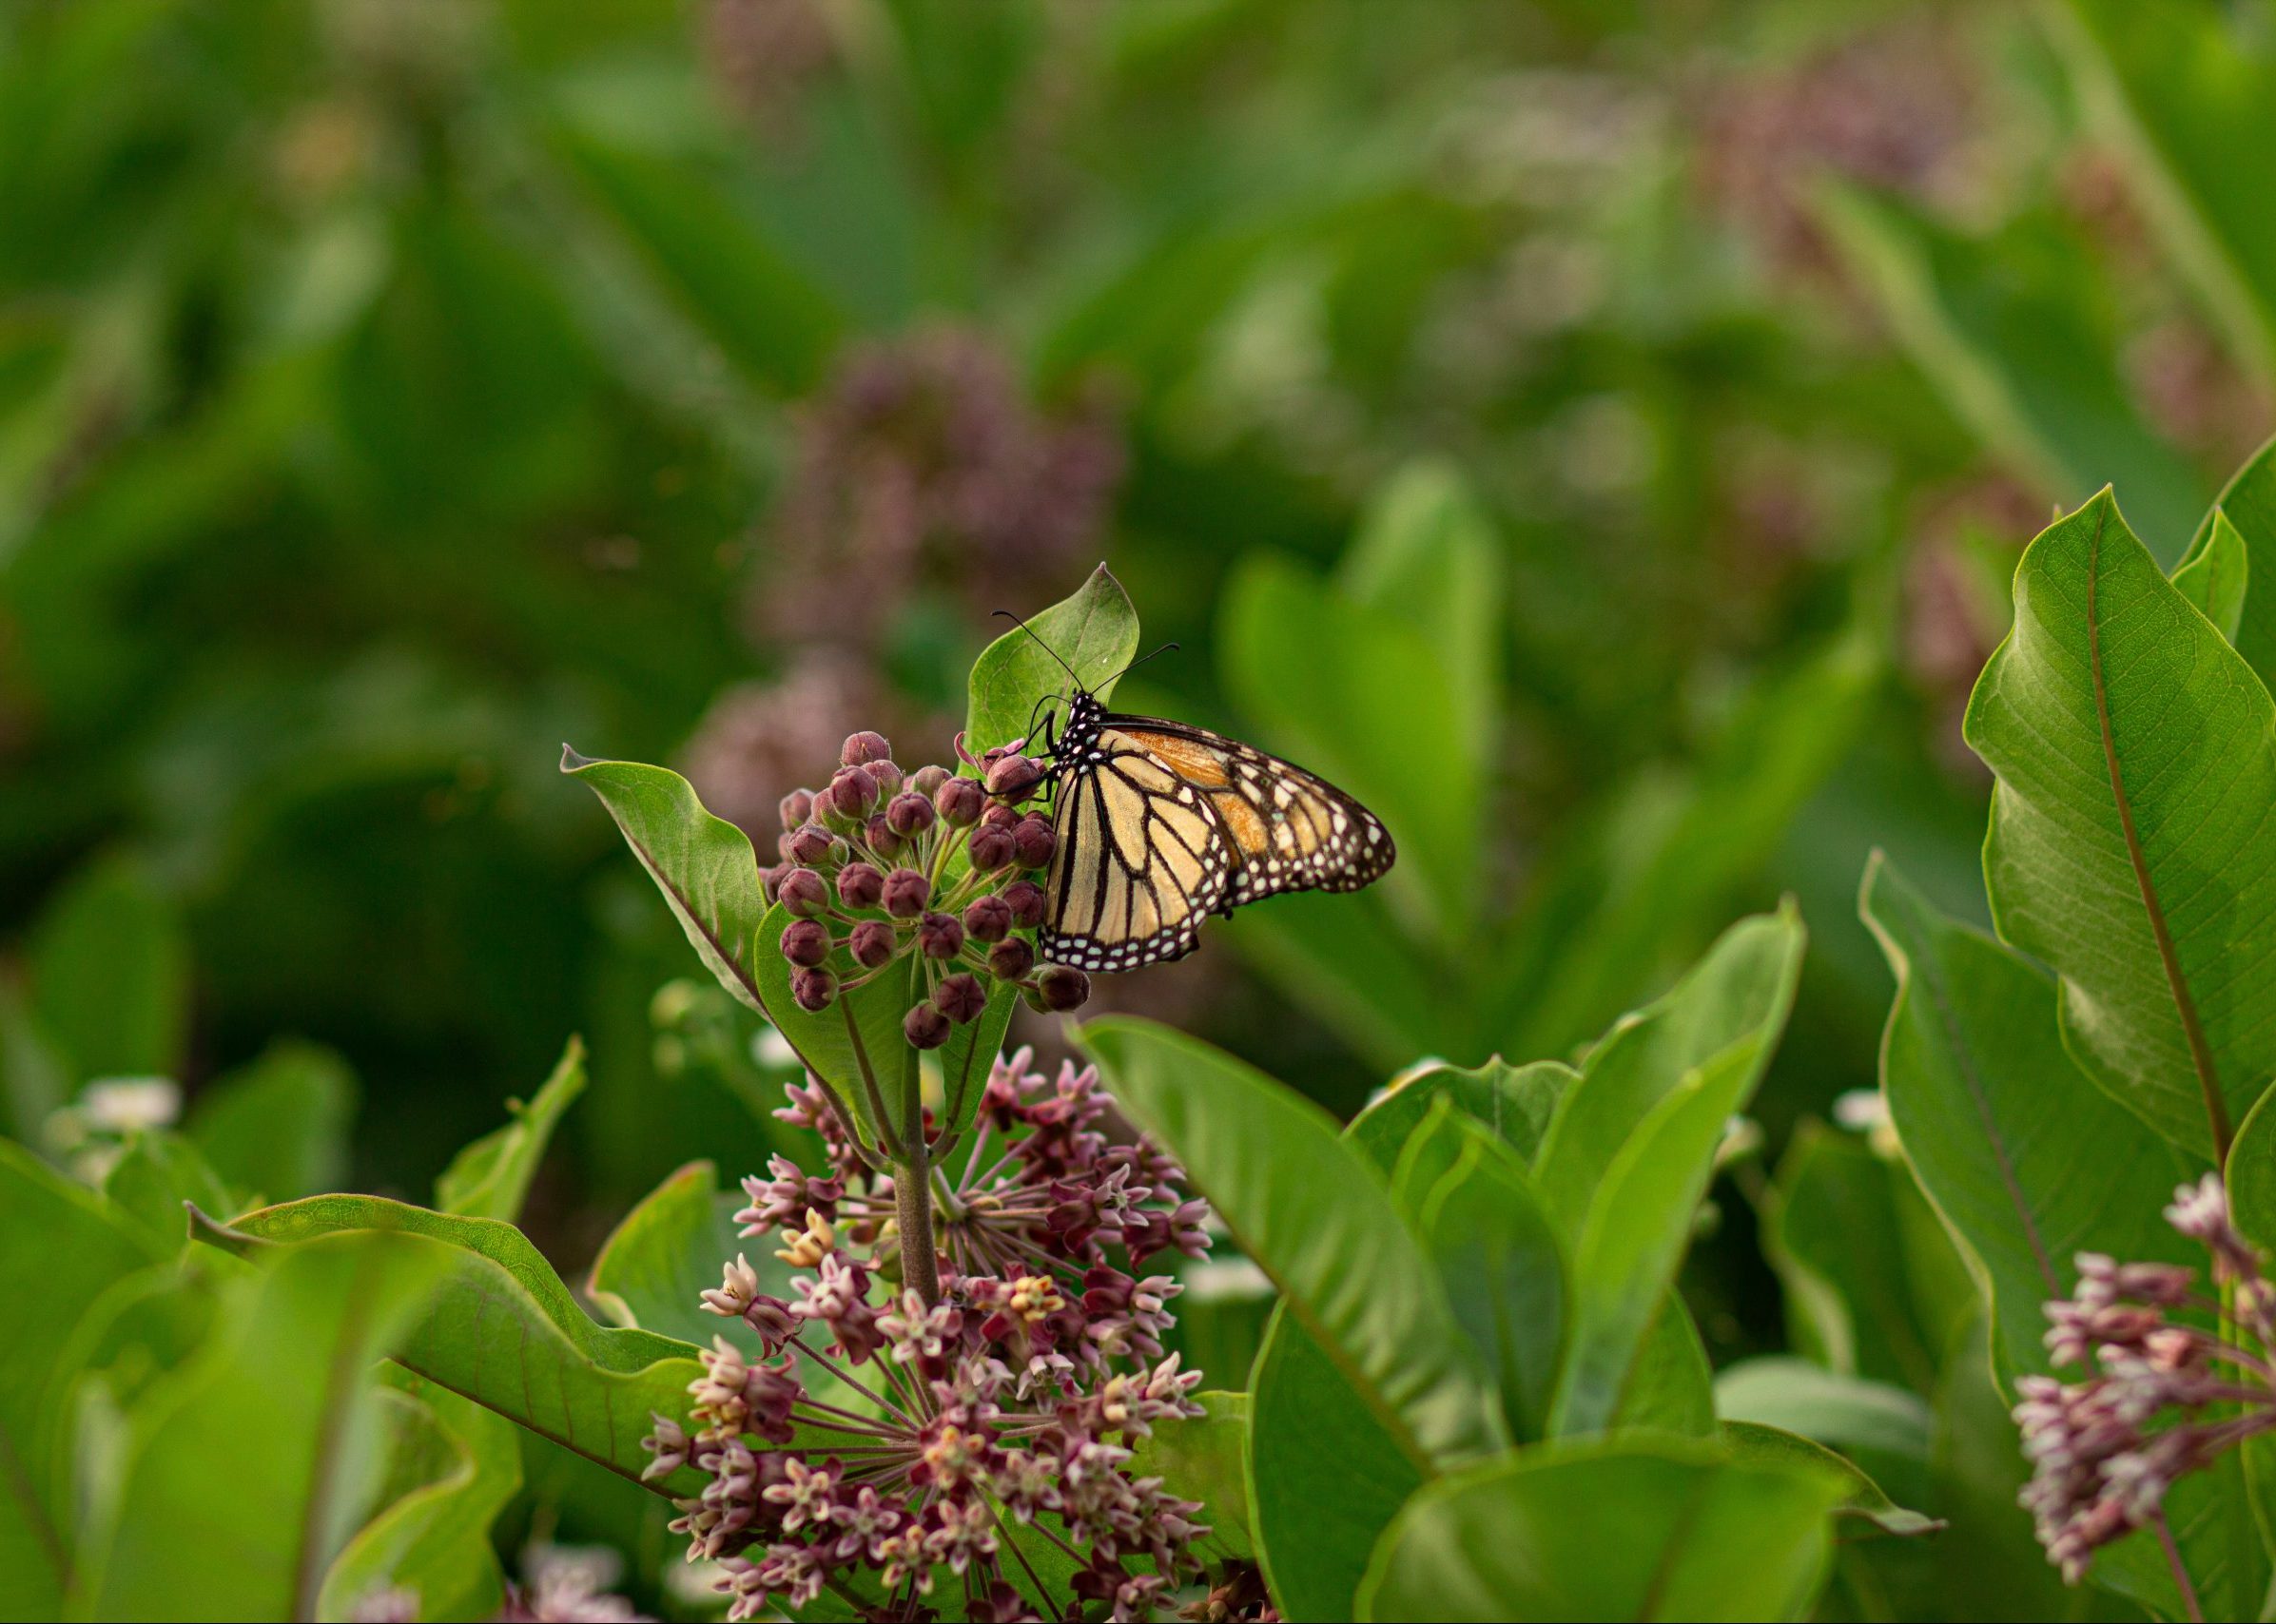 Edible milkweed for butterflies